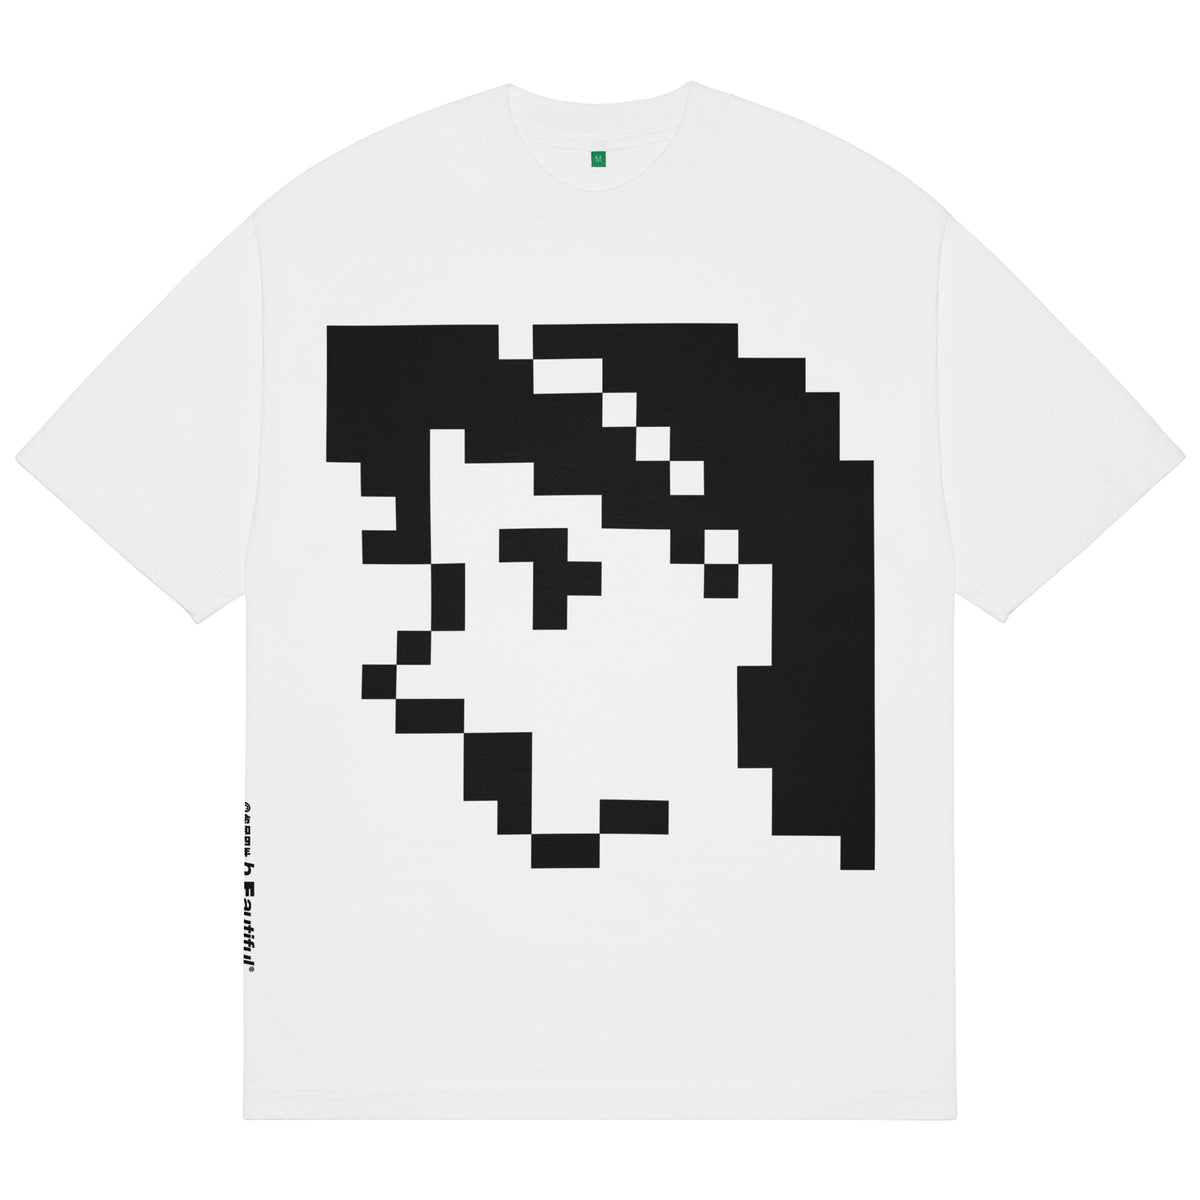 Emoji 1997 T-Shirt